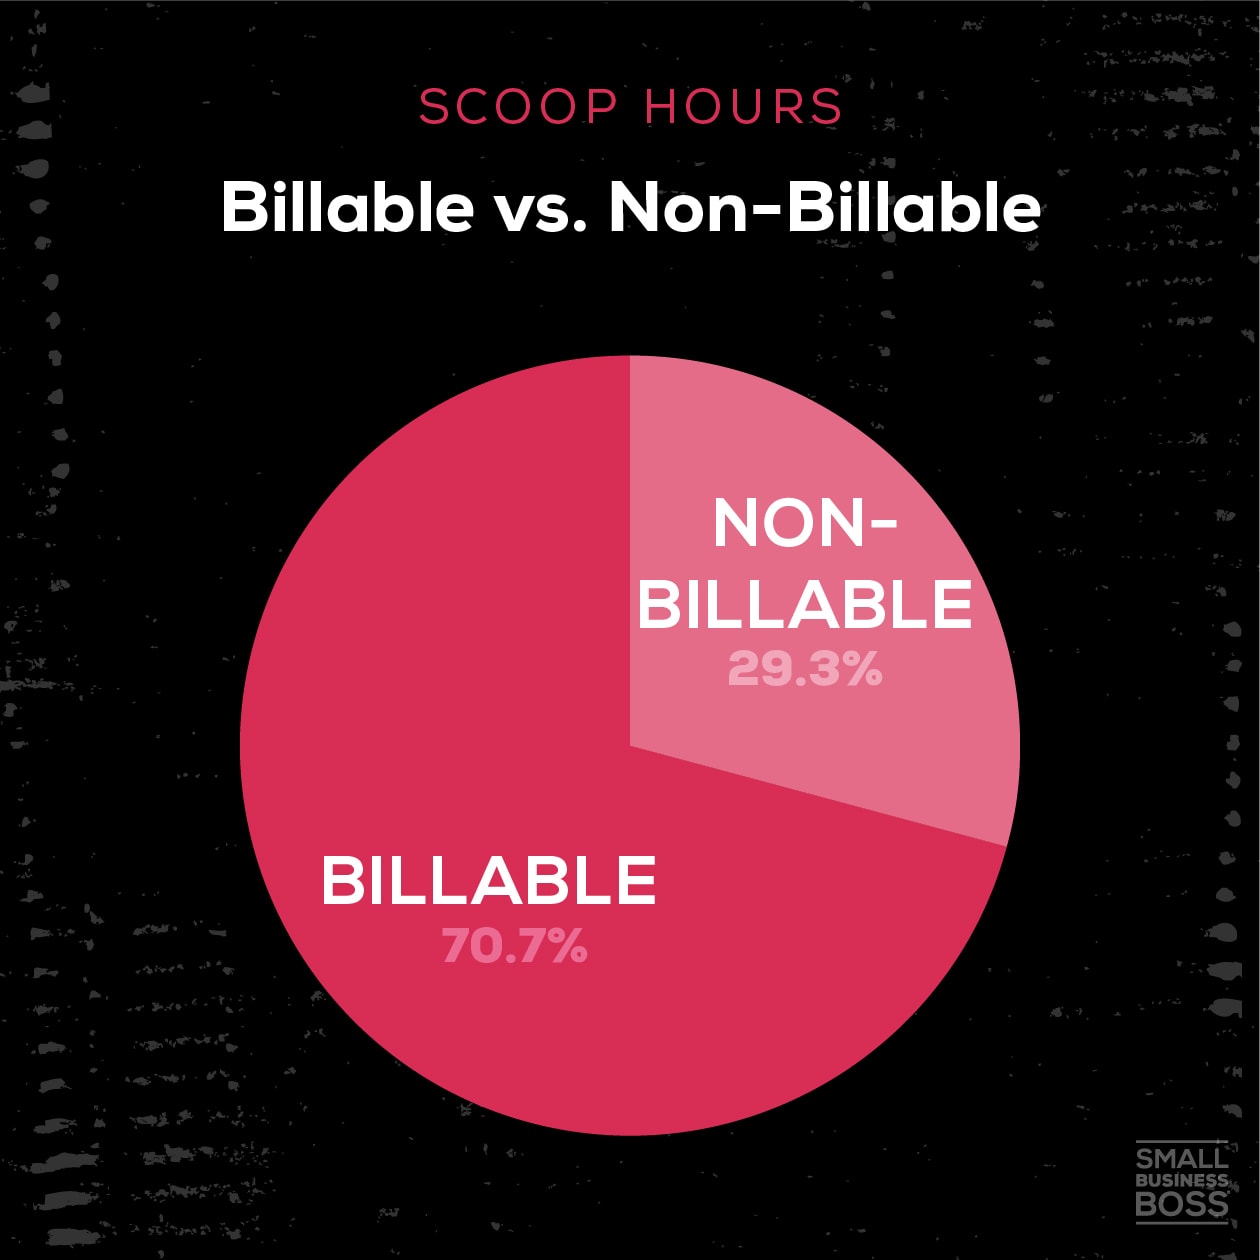 image breakdown of billable vs non-billable hours